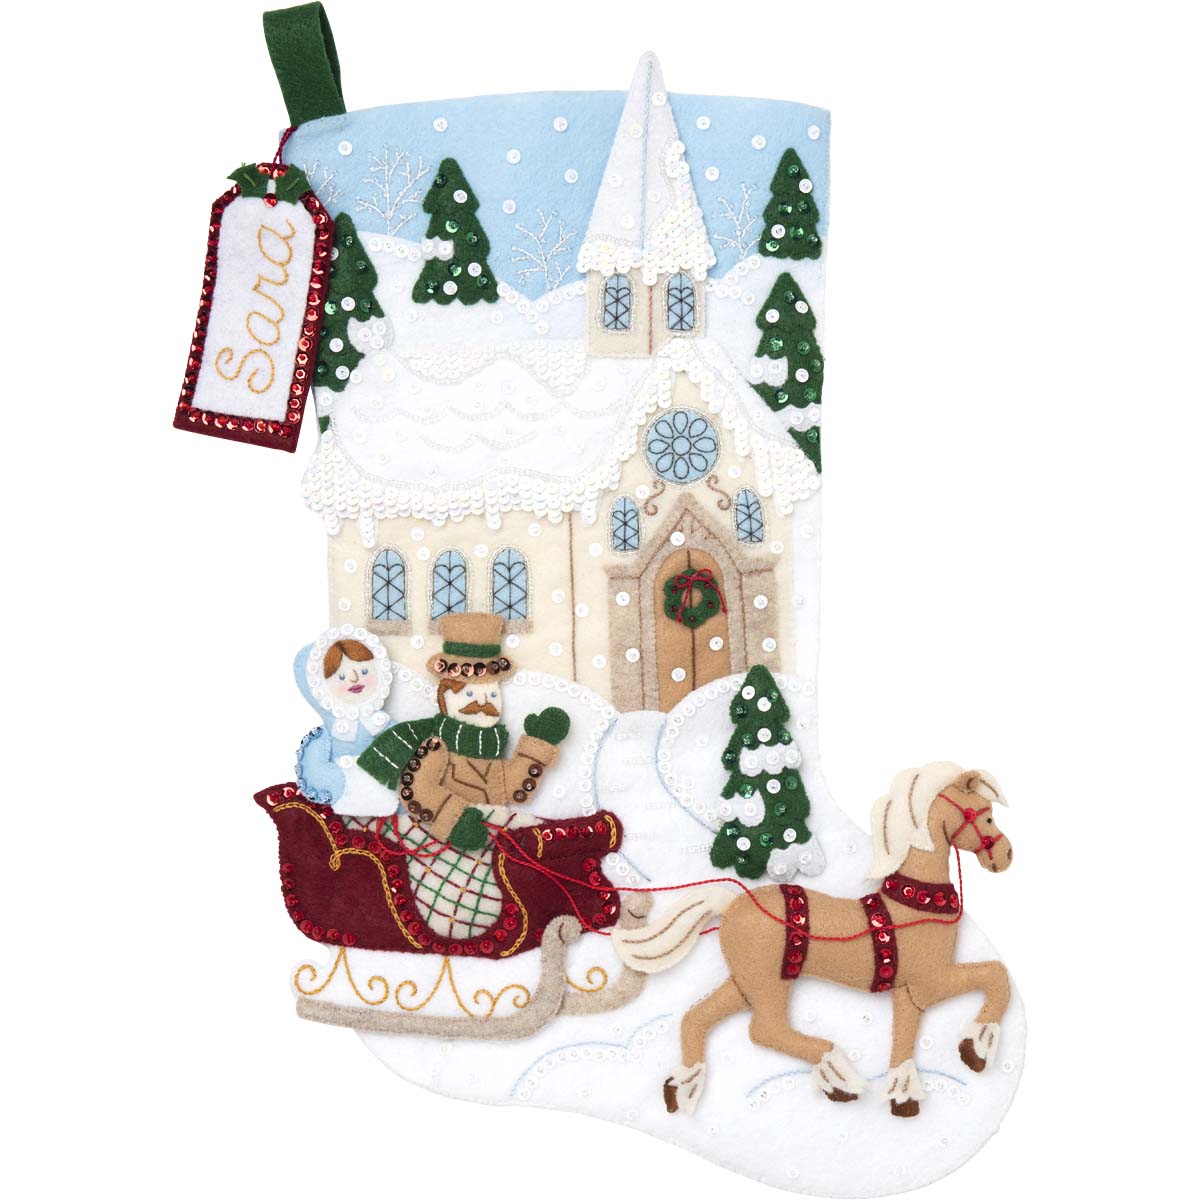 Bucilla ® Seasonal - Felt - Stocking Kits - Dashing Through the Snow - 89074E